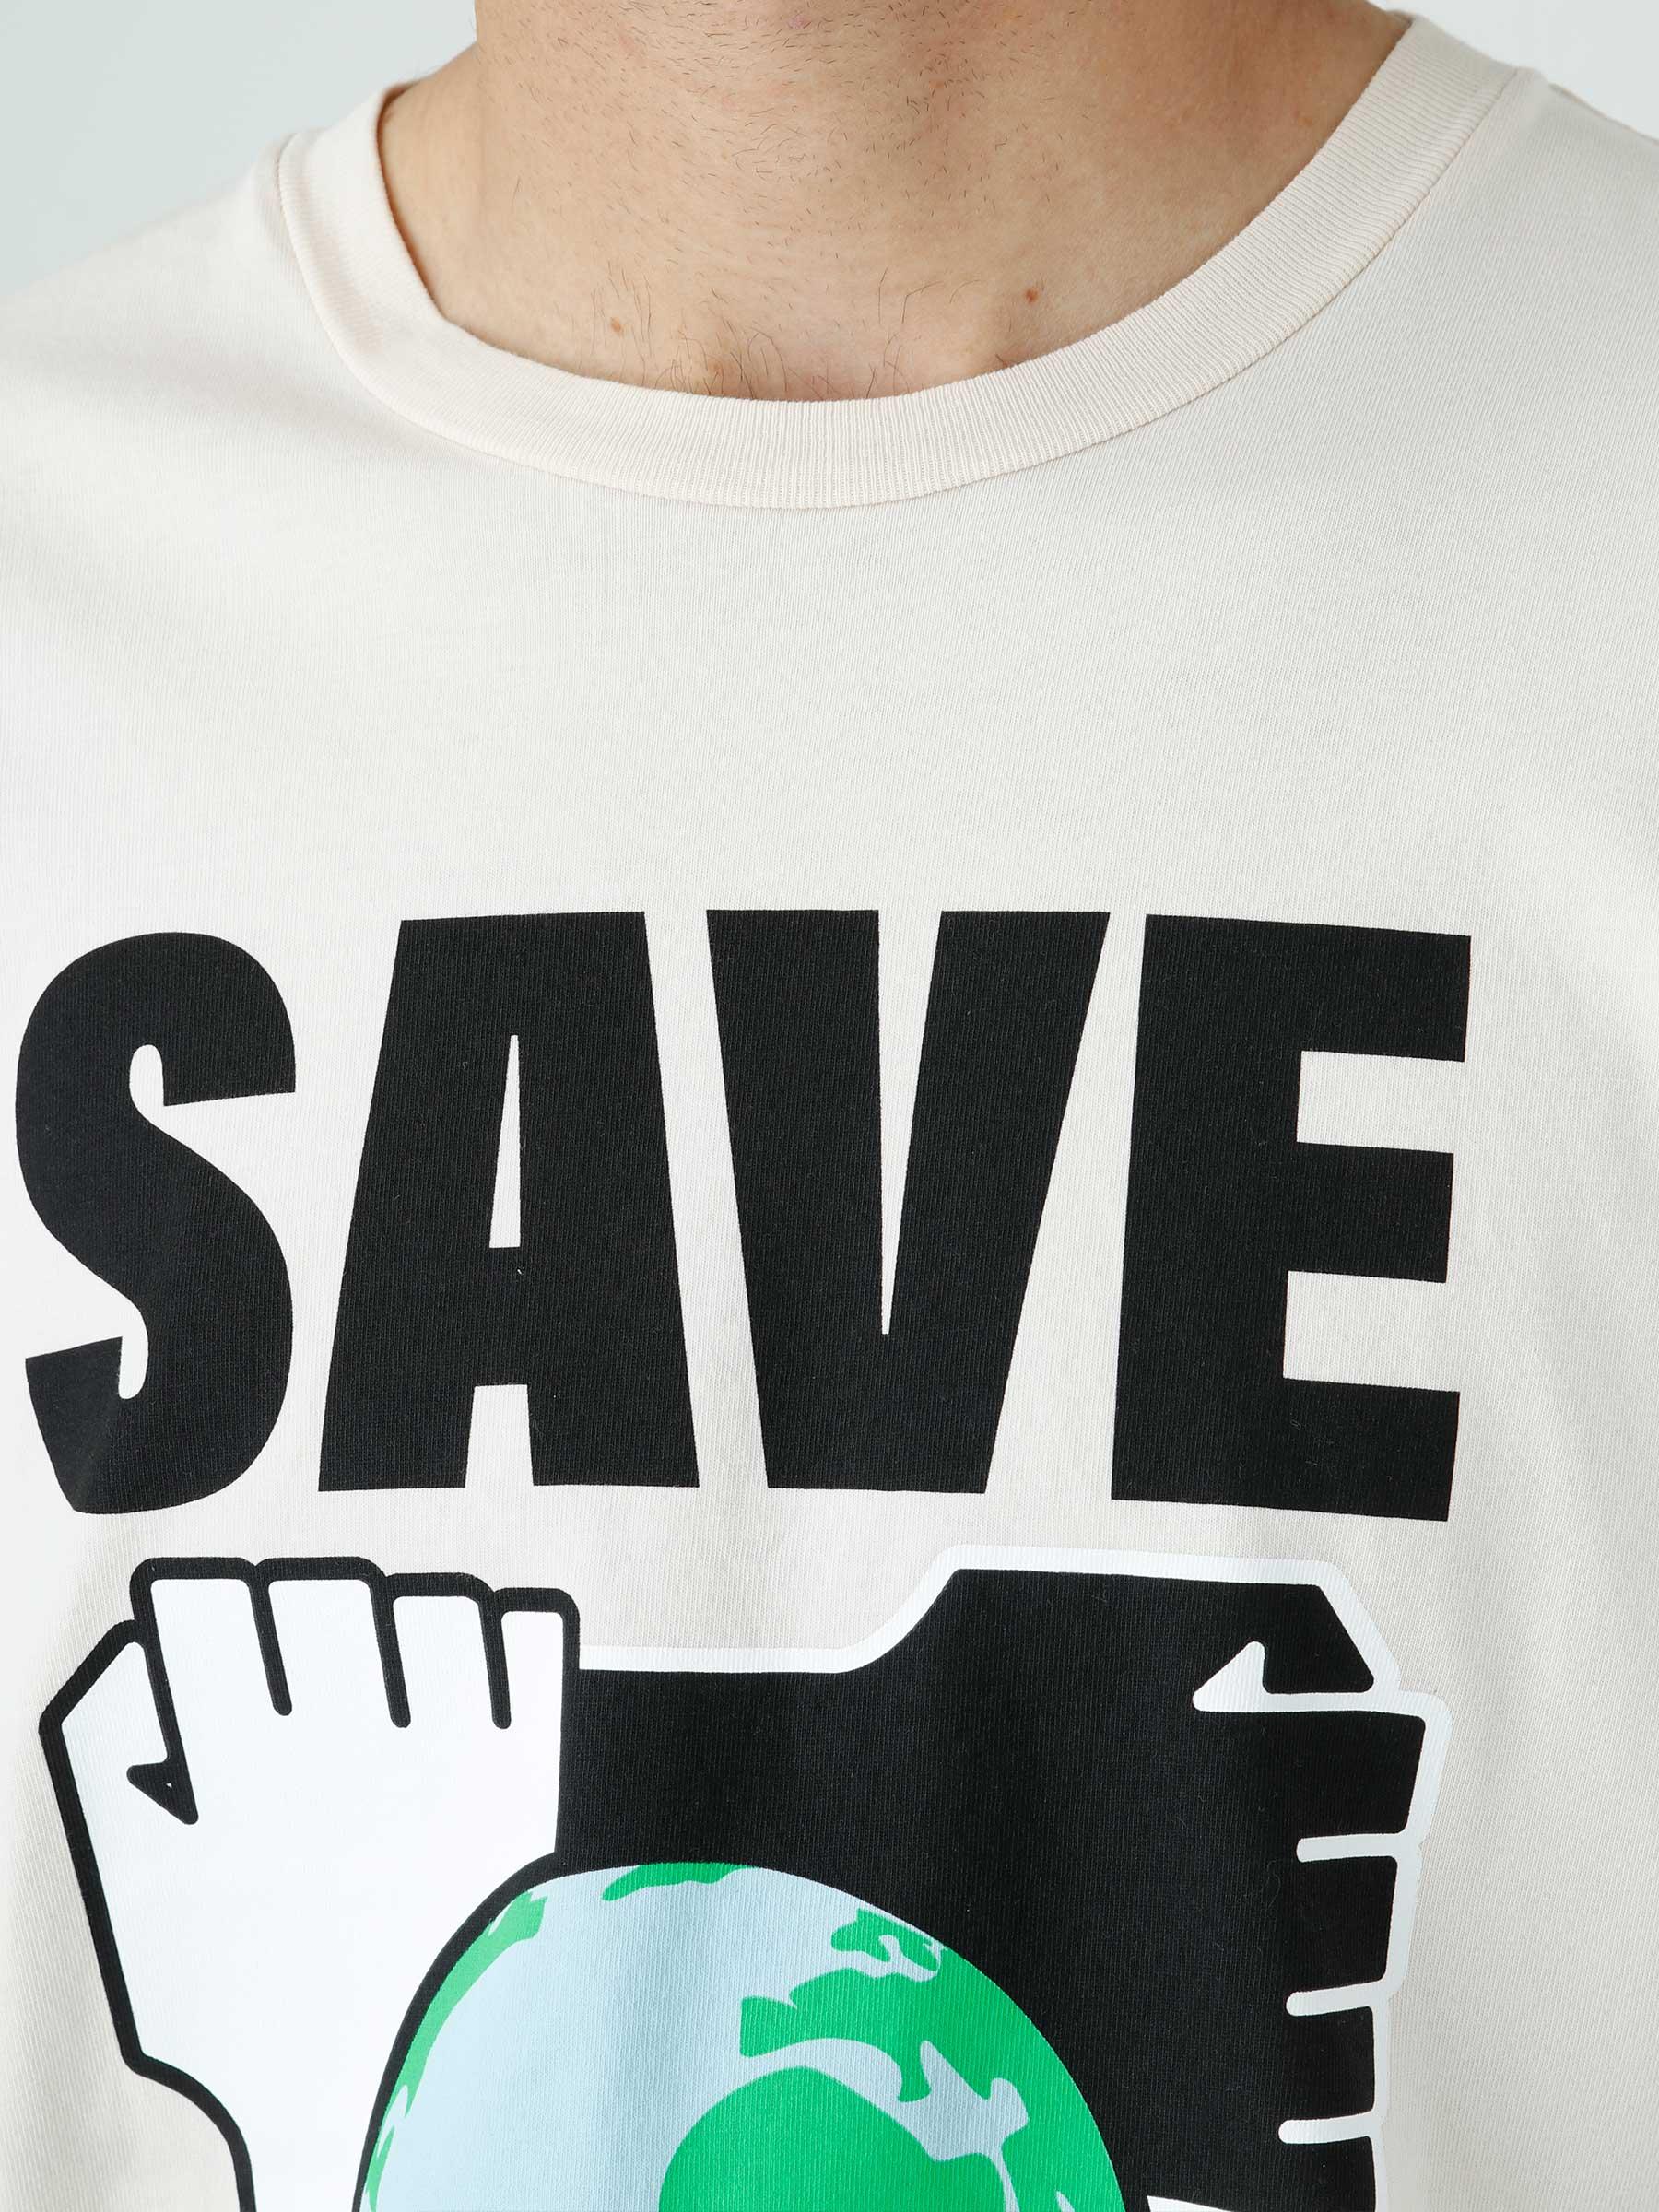 Obey Save Earth T-shirt Sago 163003086